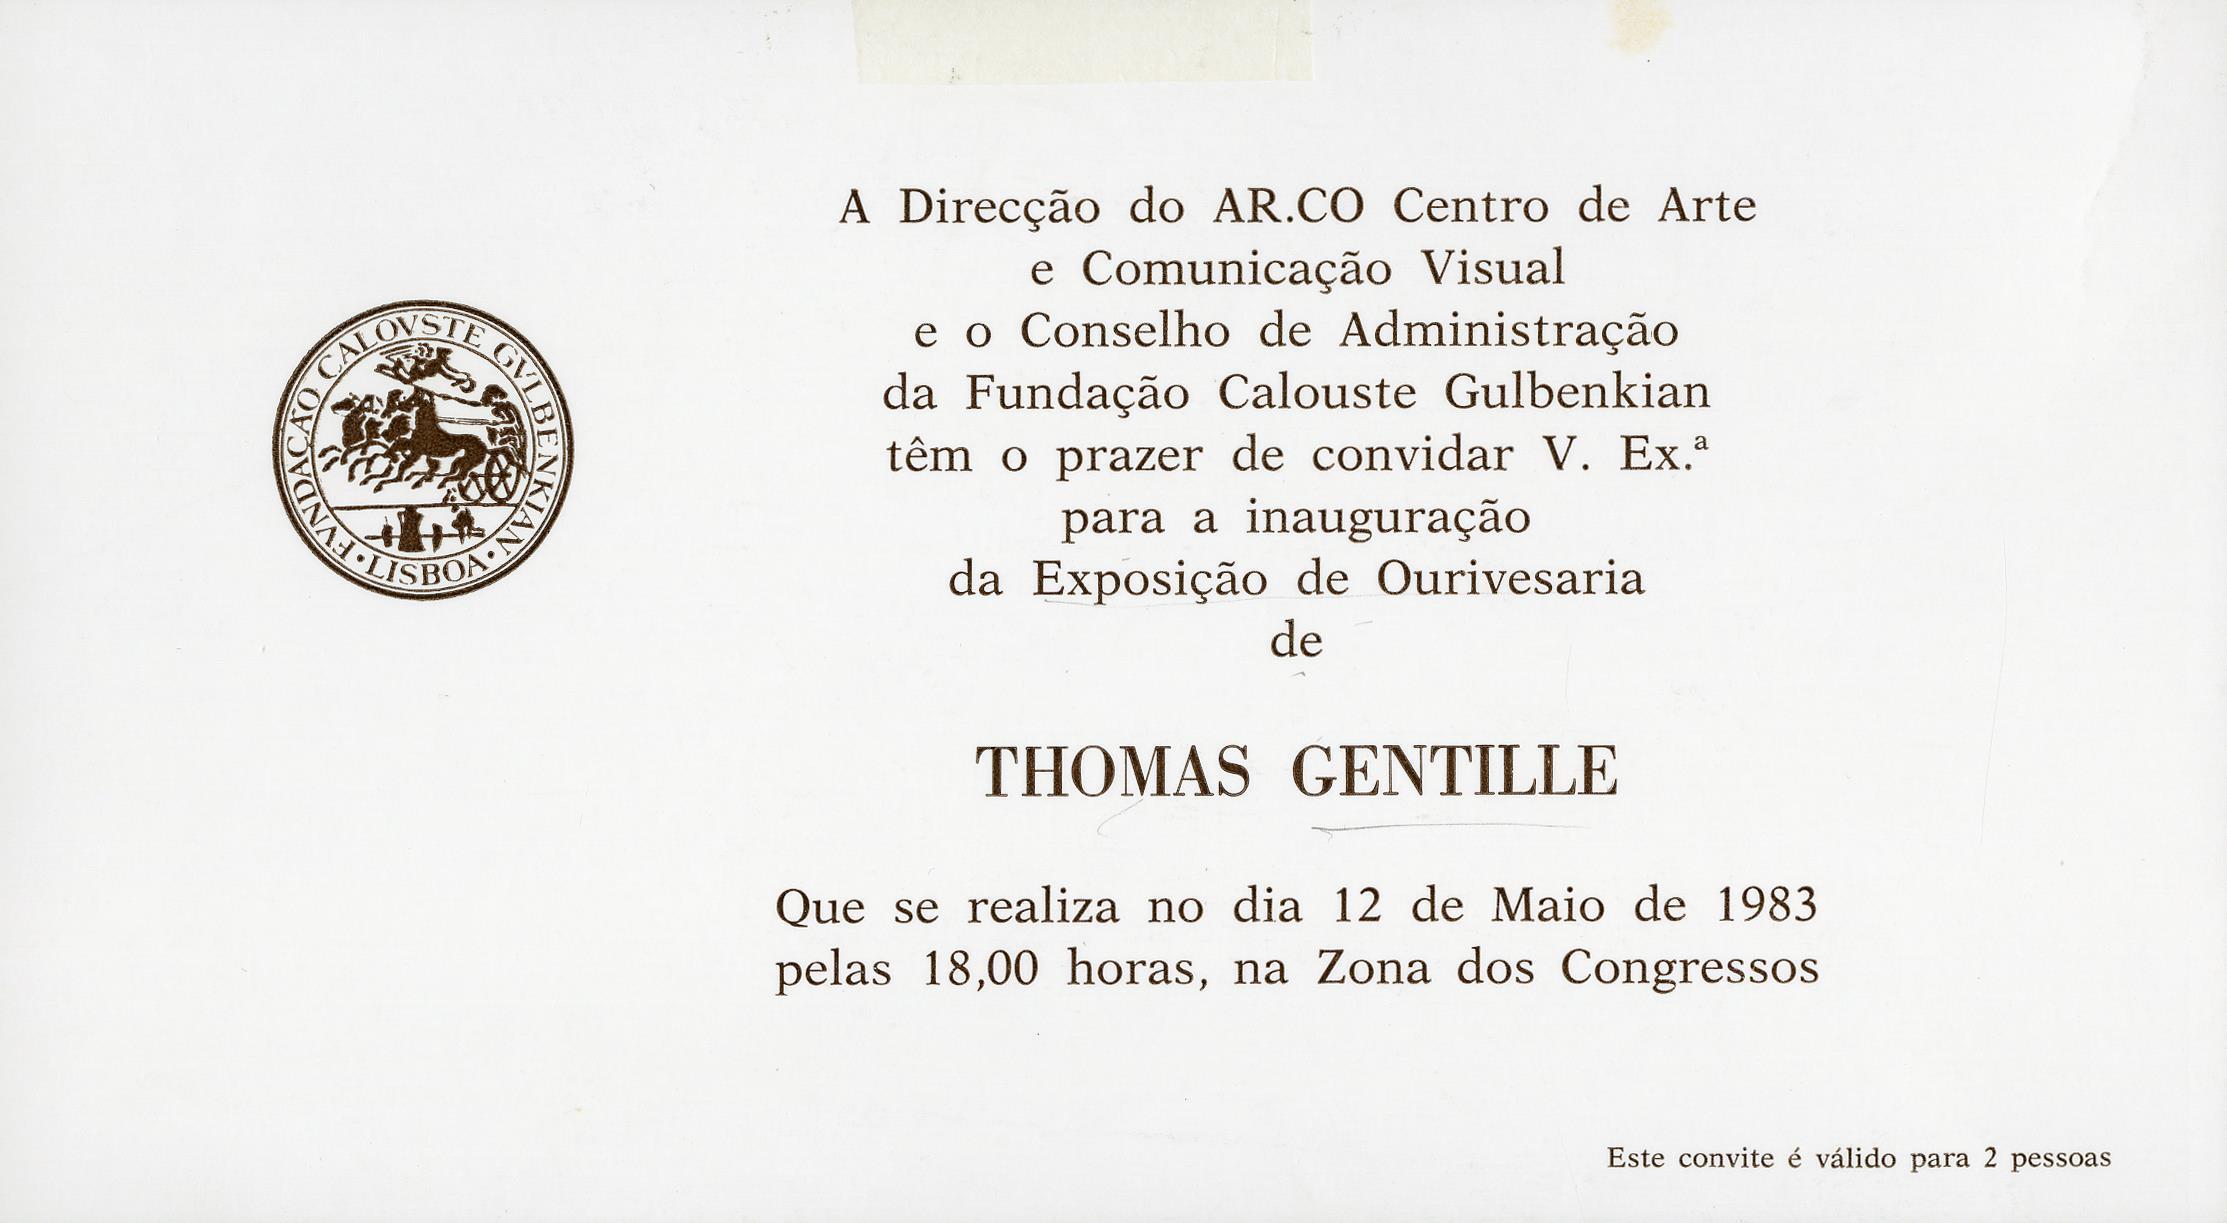 Thomas Gentille